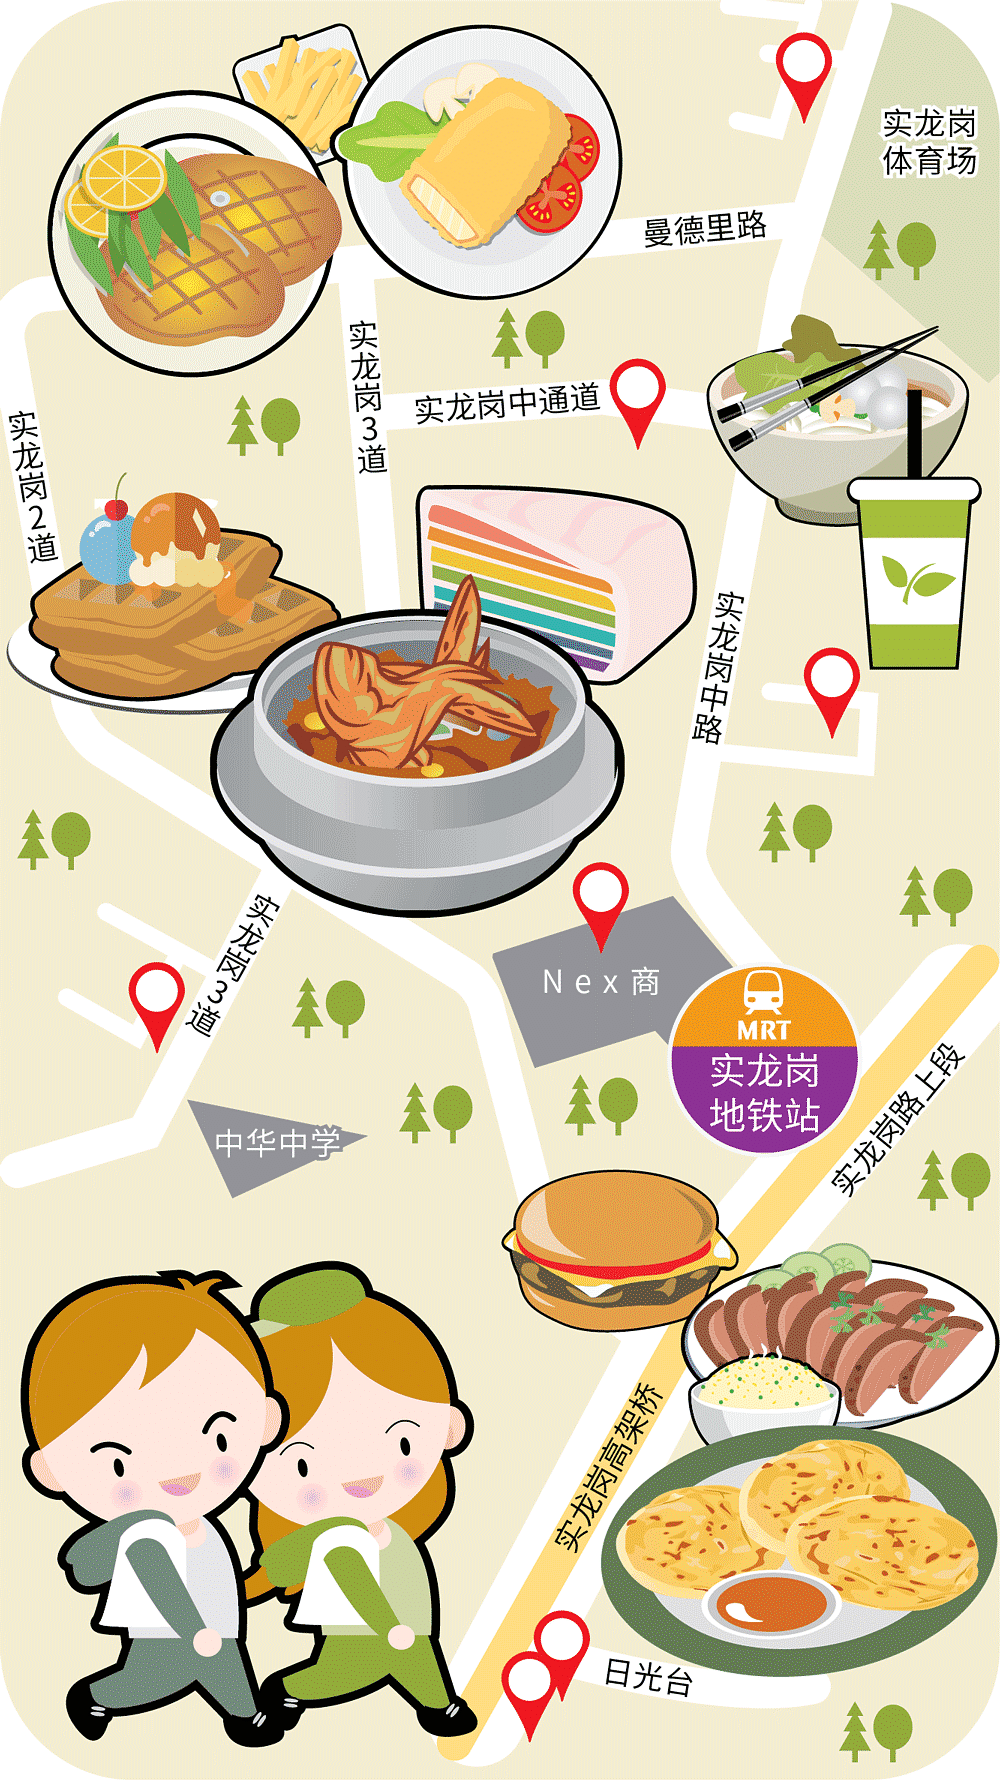 20191231-wanbao-food-search-serangoon-mrt-cover.png